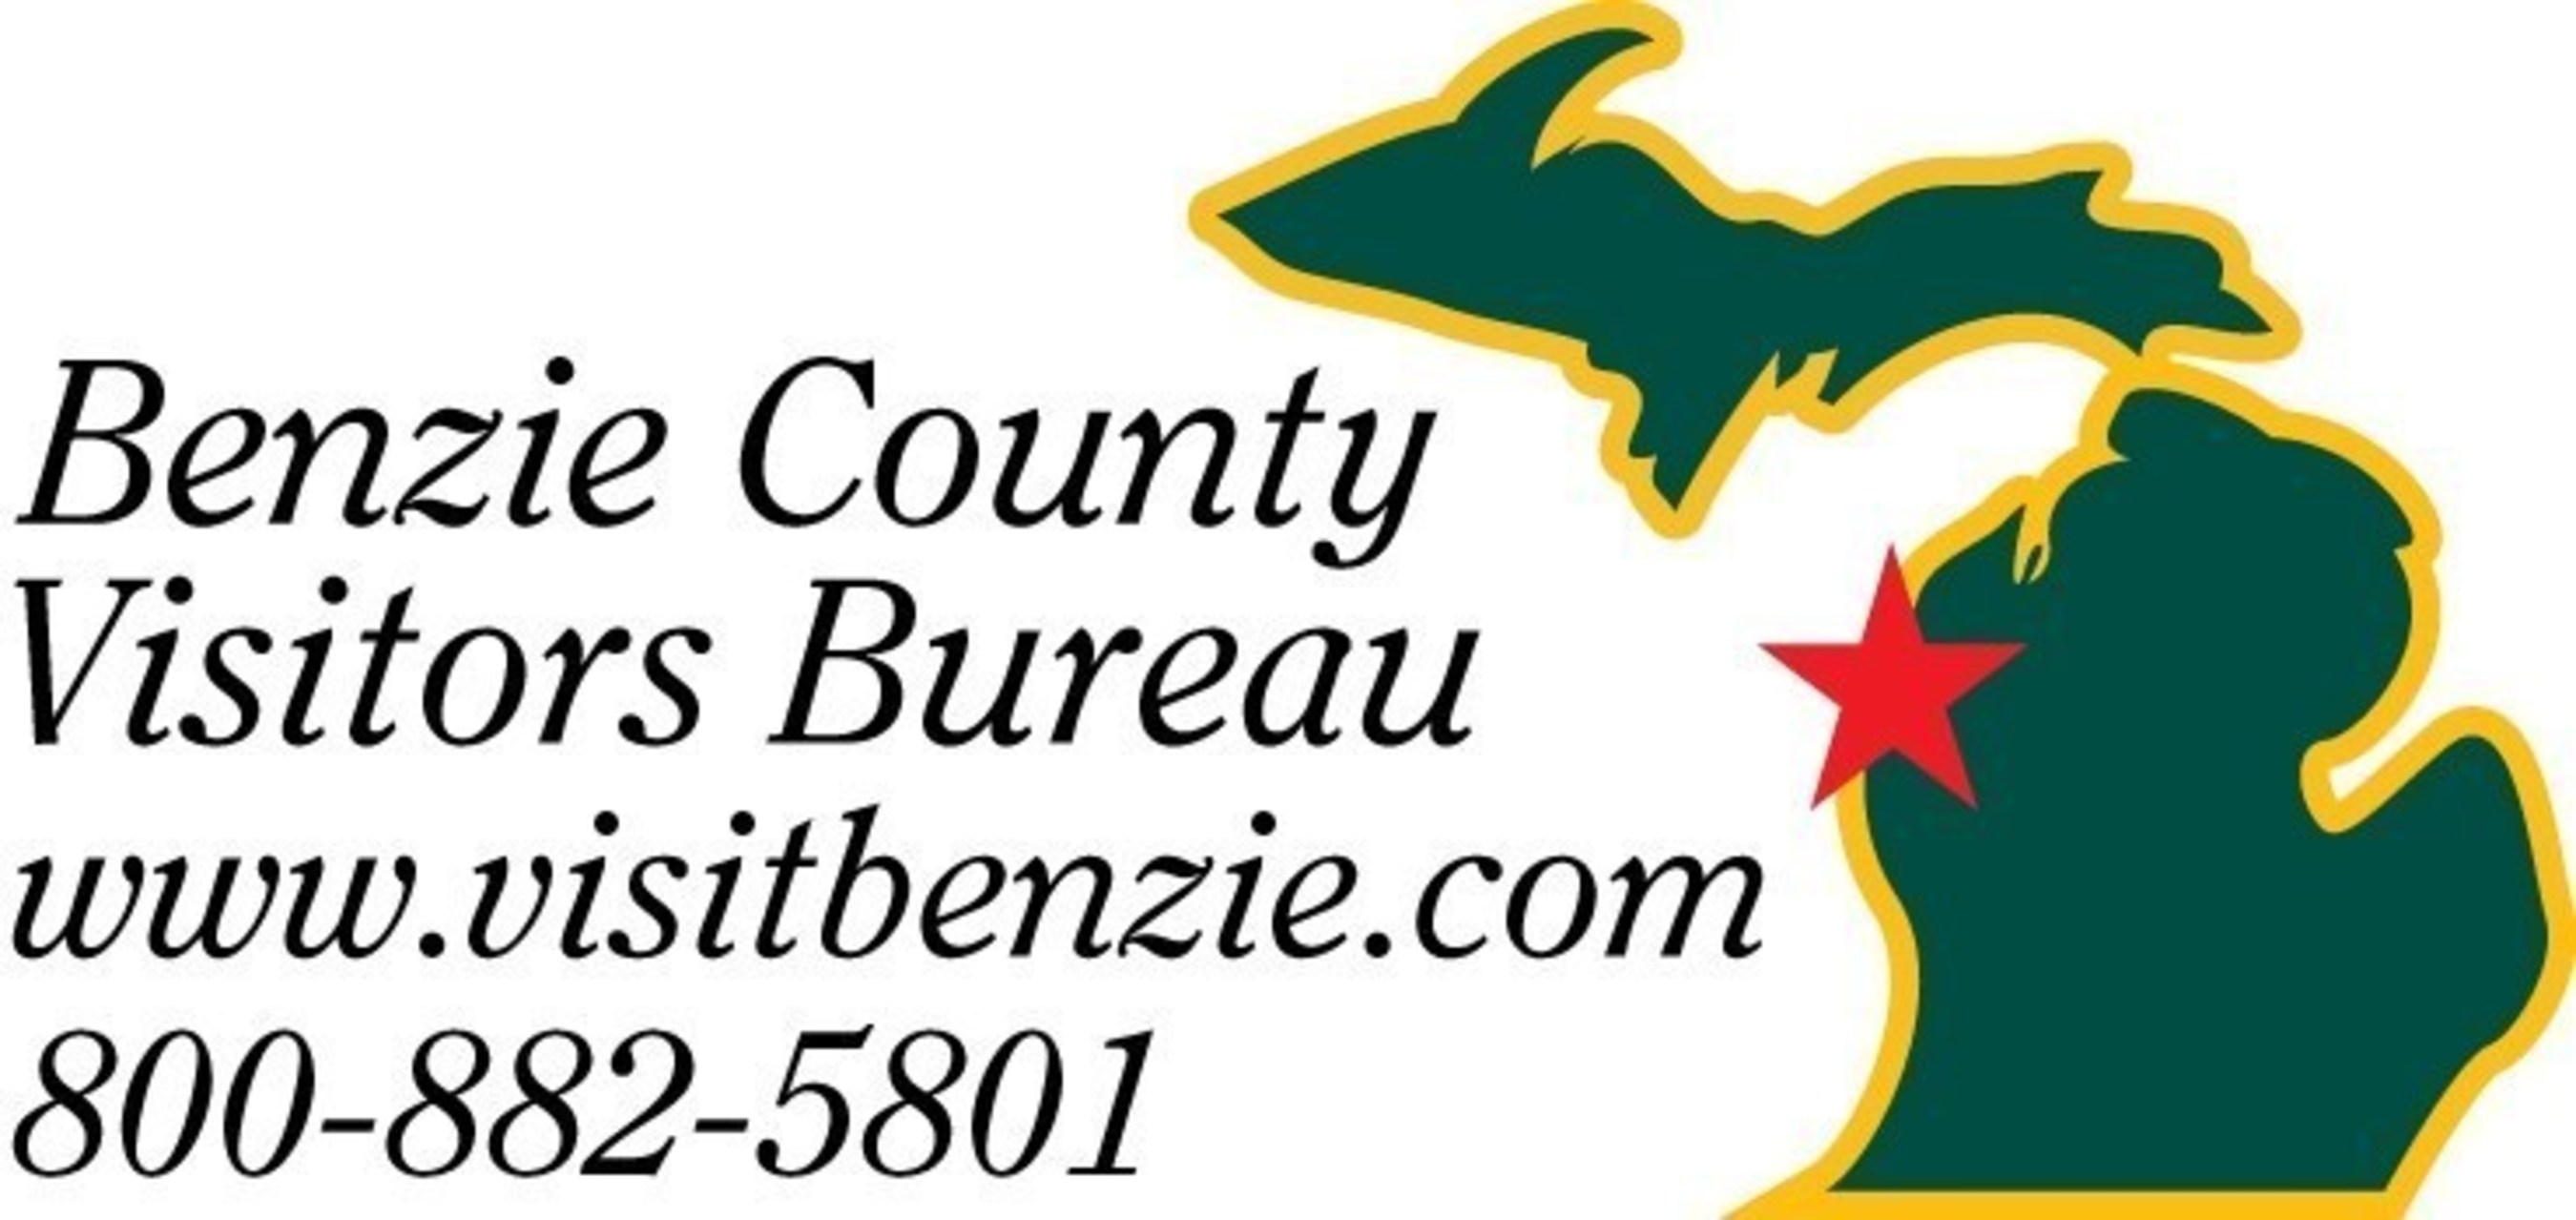 Benzie County Visitors Bureau